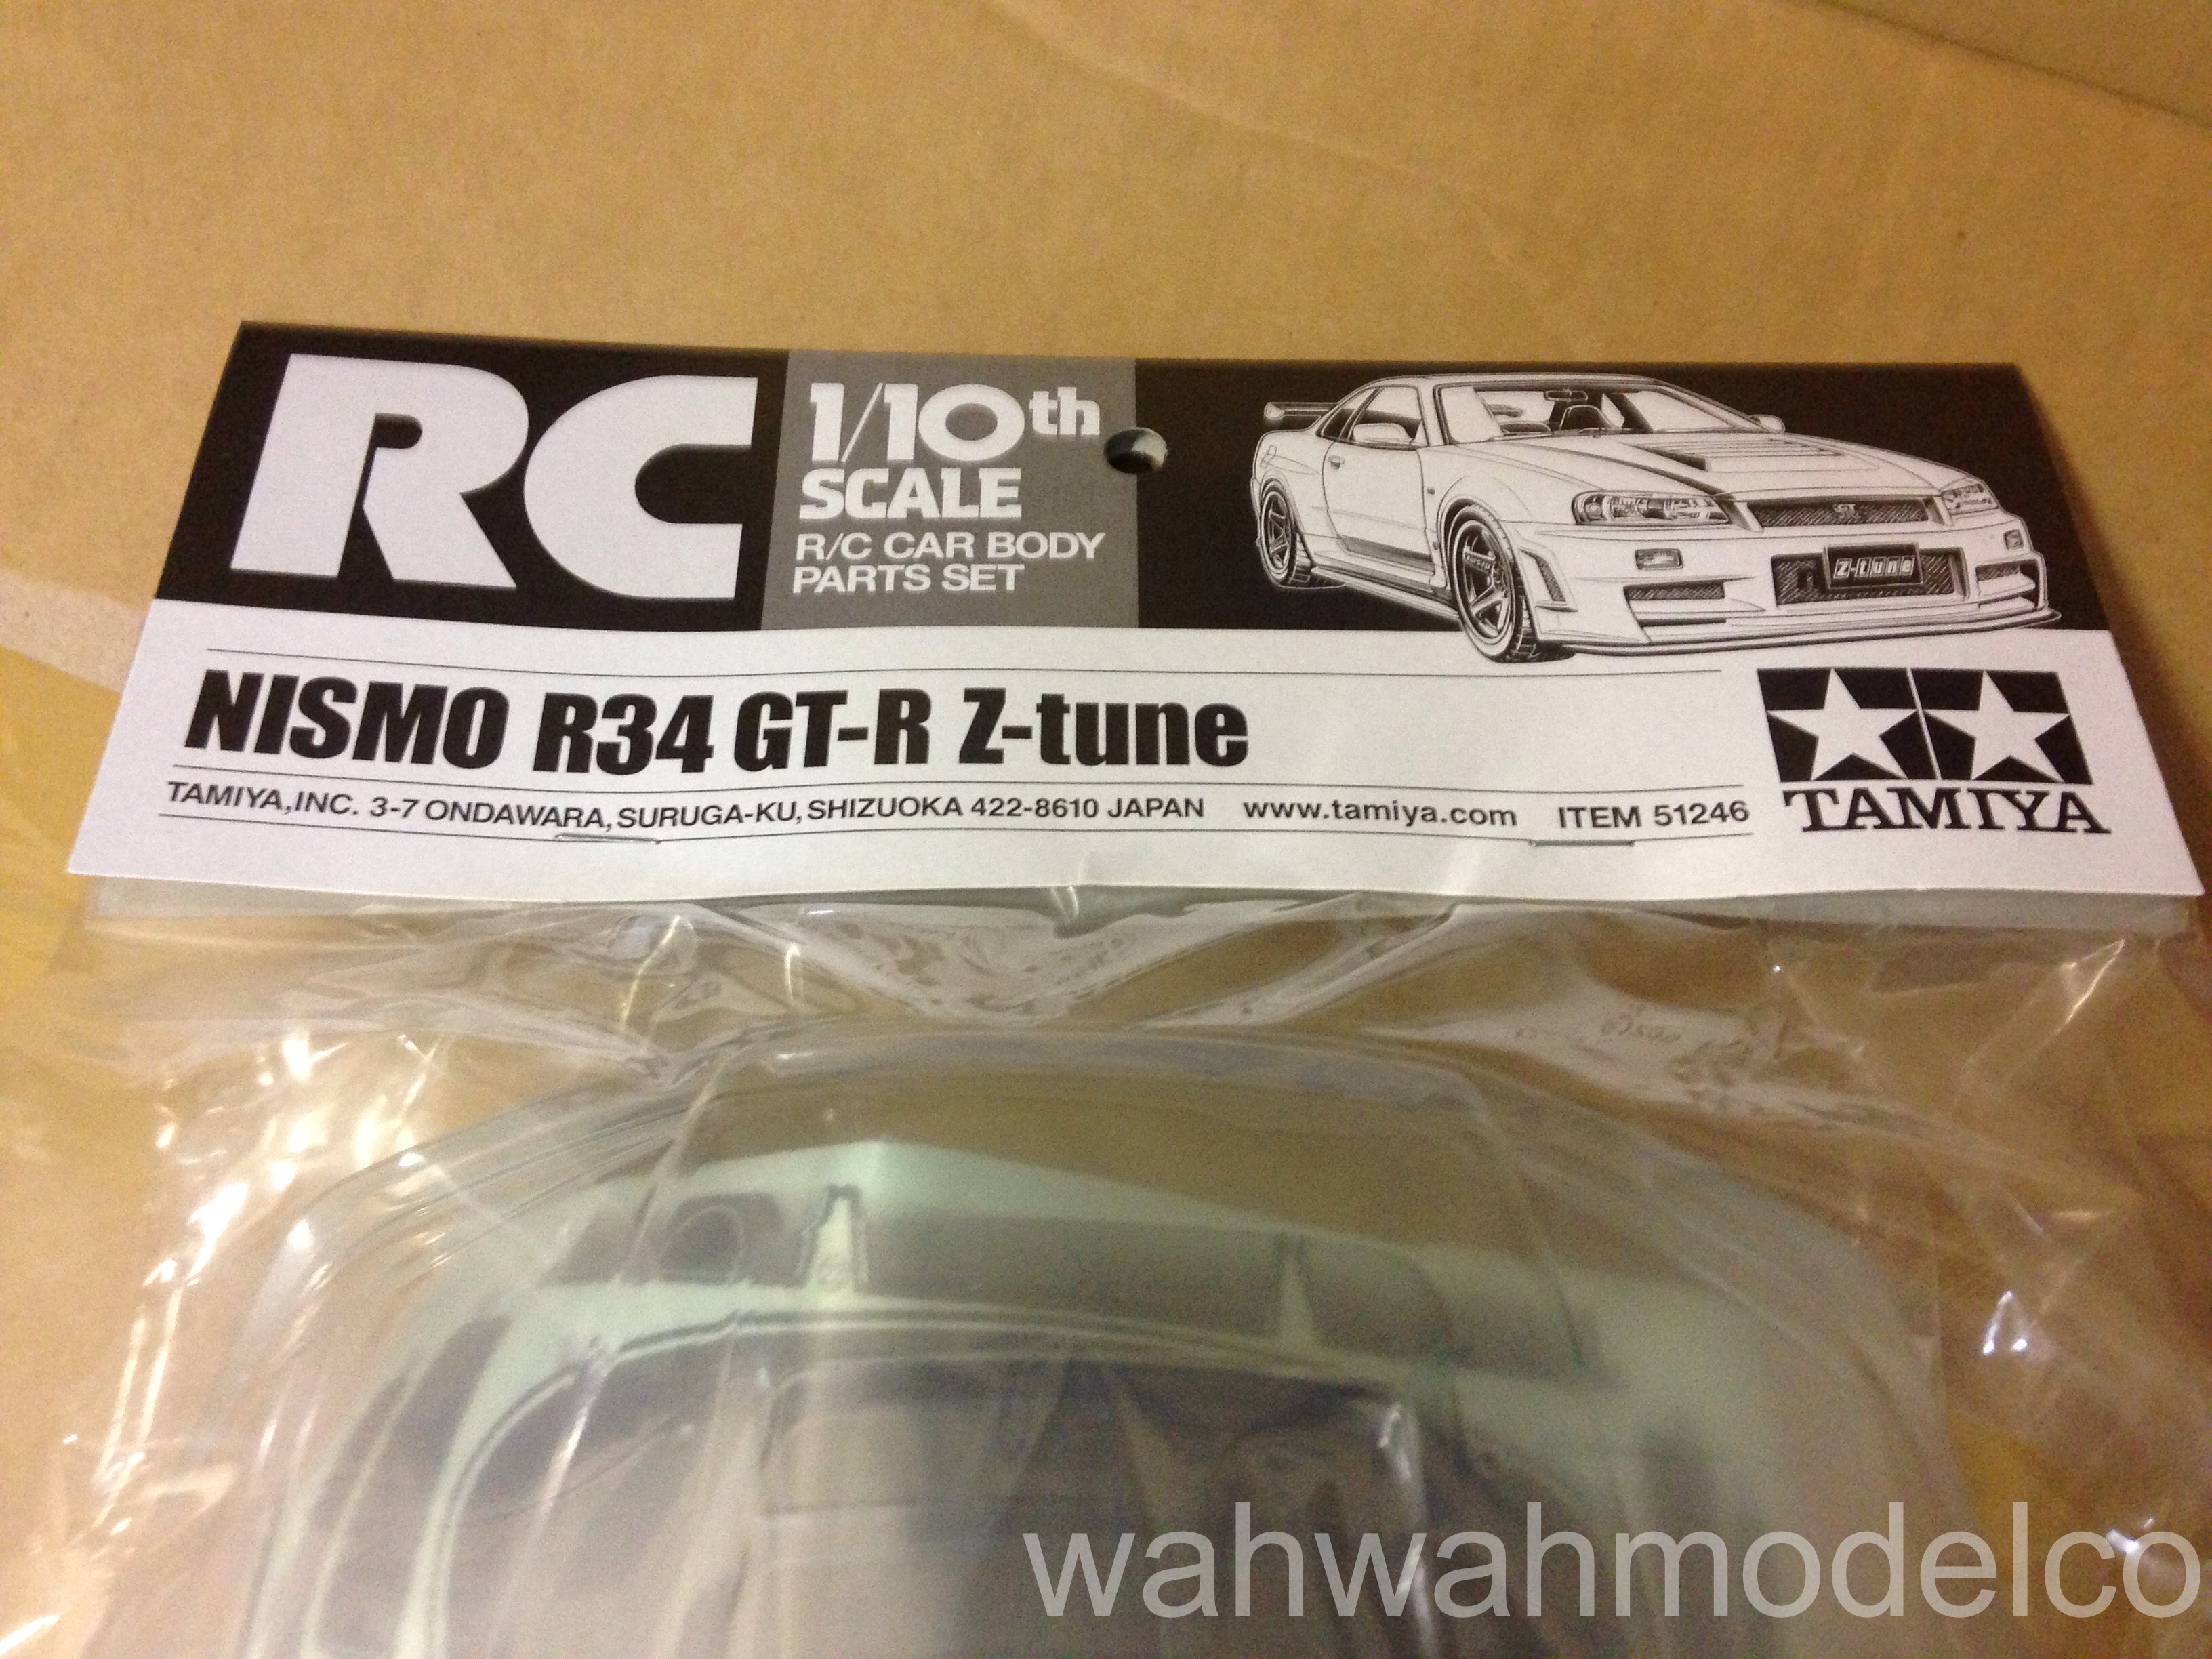 Tamiya 51246 1/10 RC Body Set NISMO R34 GT-R – Z Tune